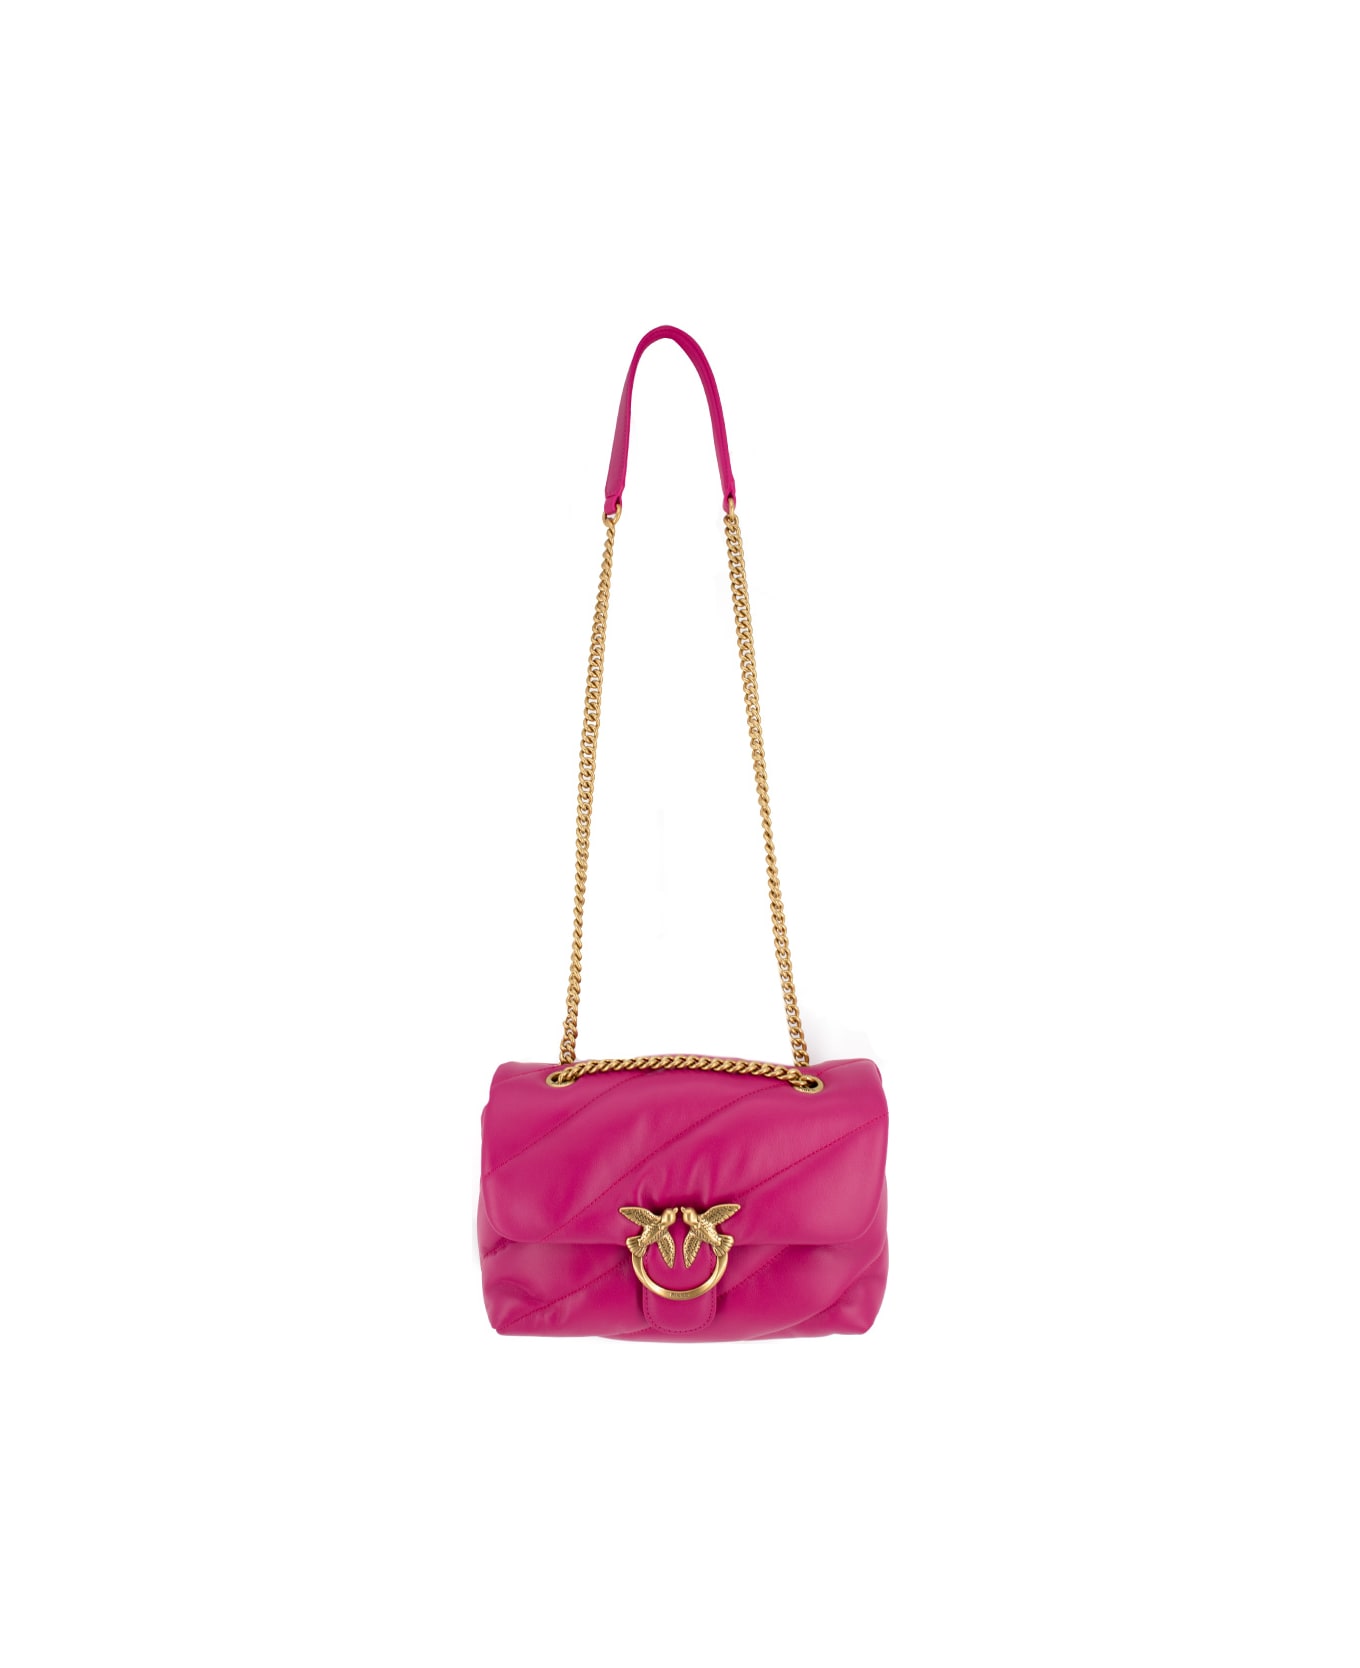 Pinko Classic Love Bag Puff Maxi Quilt Shoulder Bag - PINK PINKO ANTIQUE GOLD